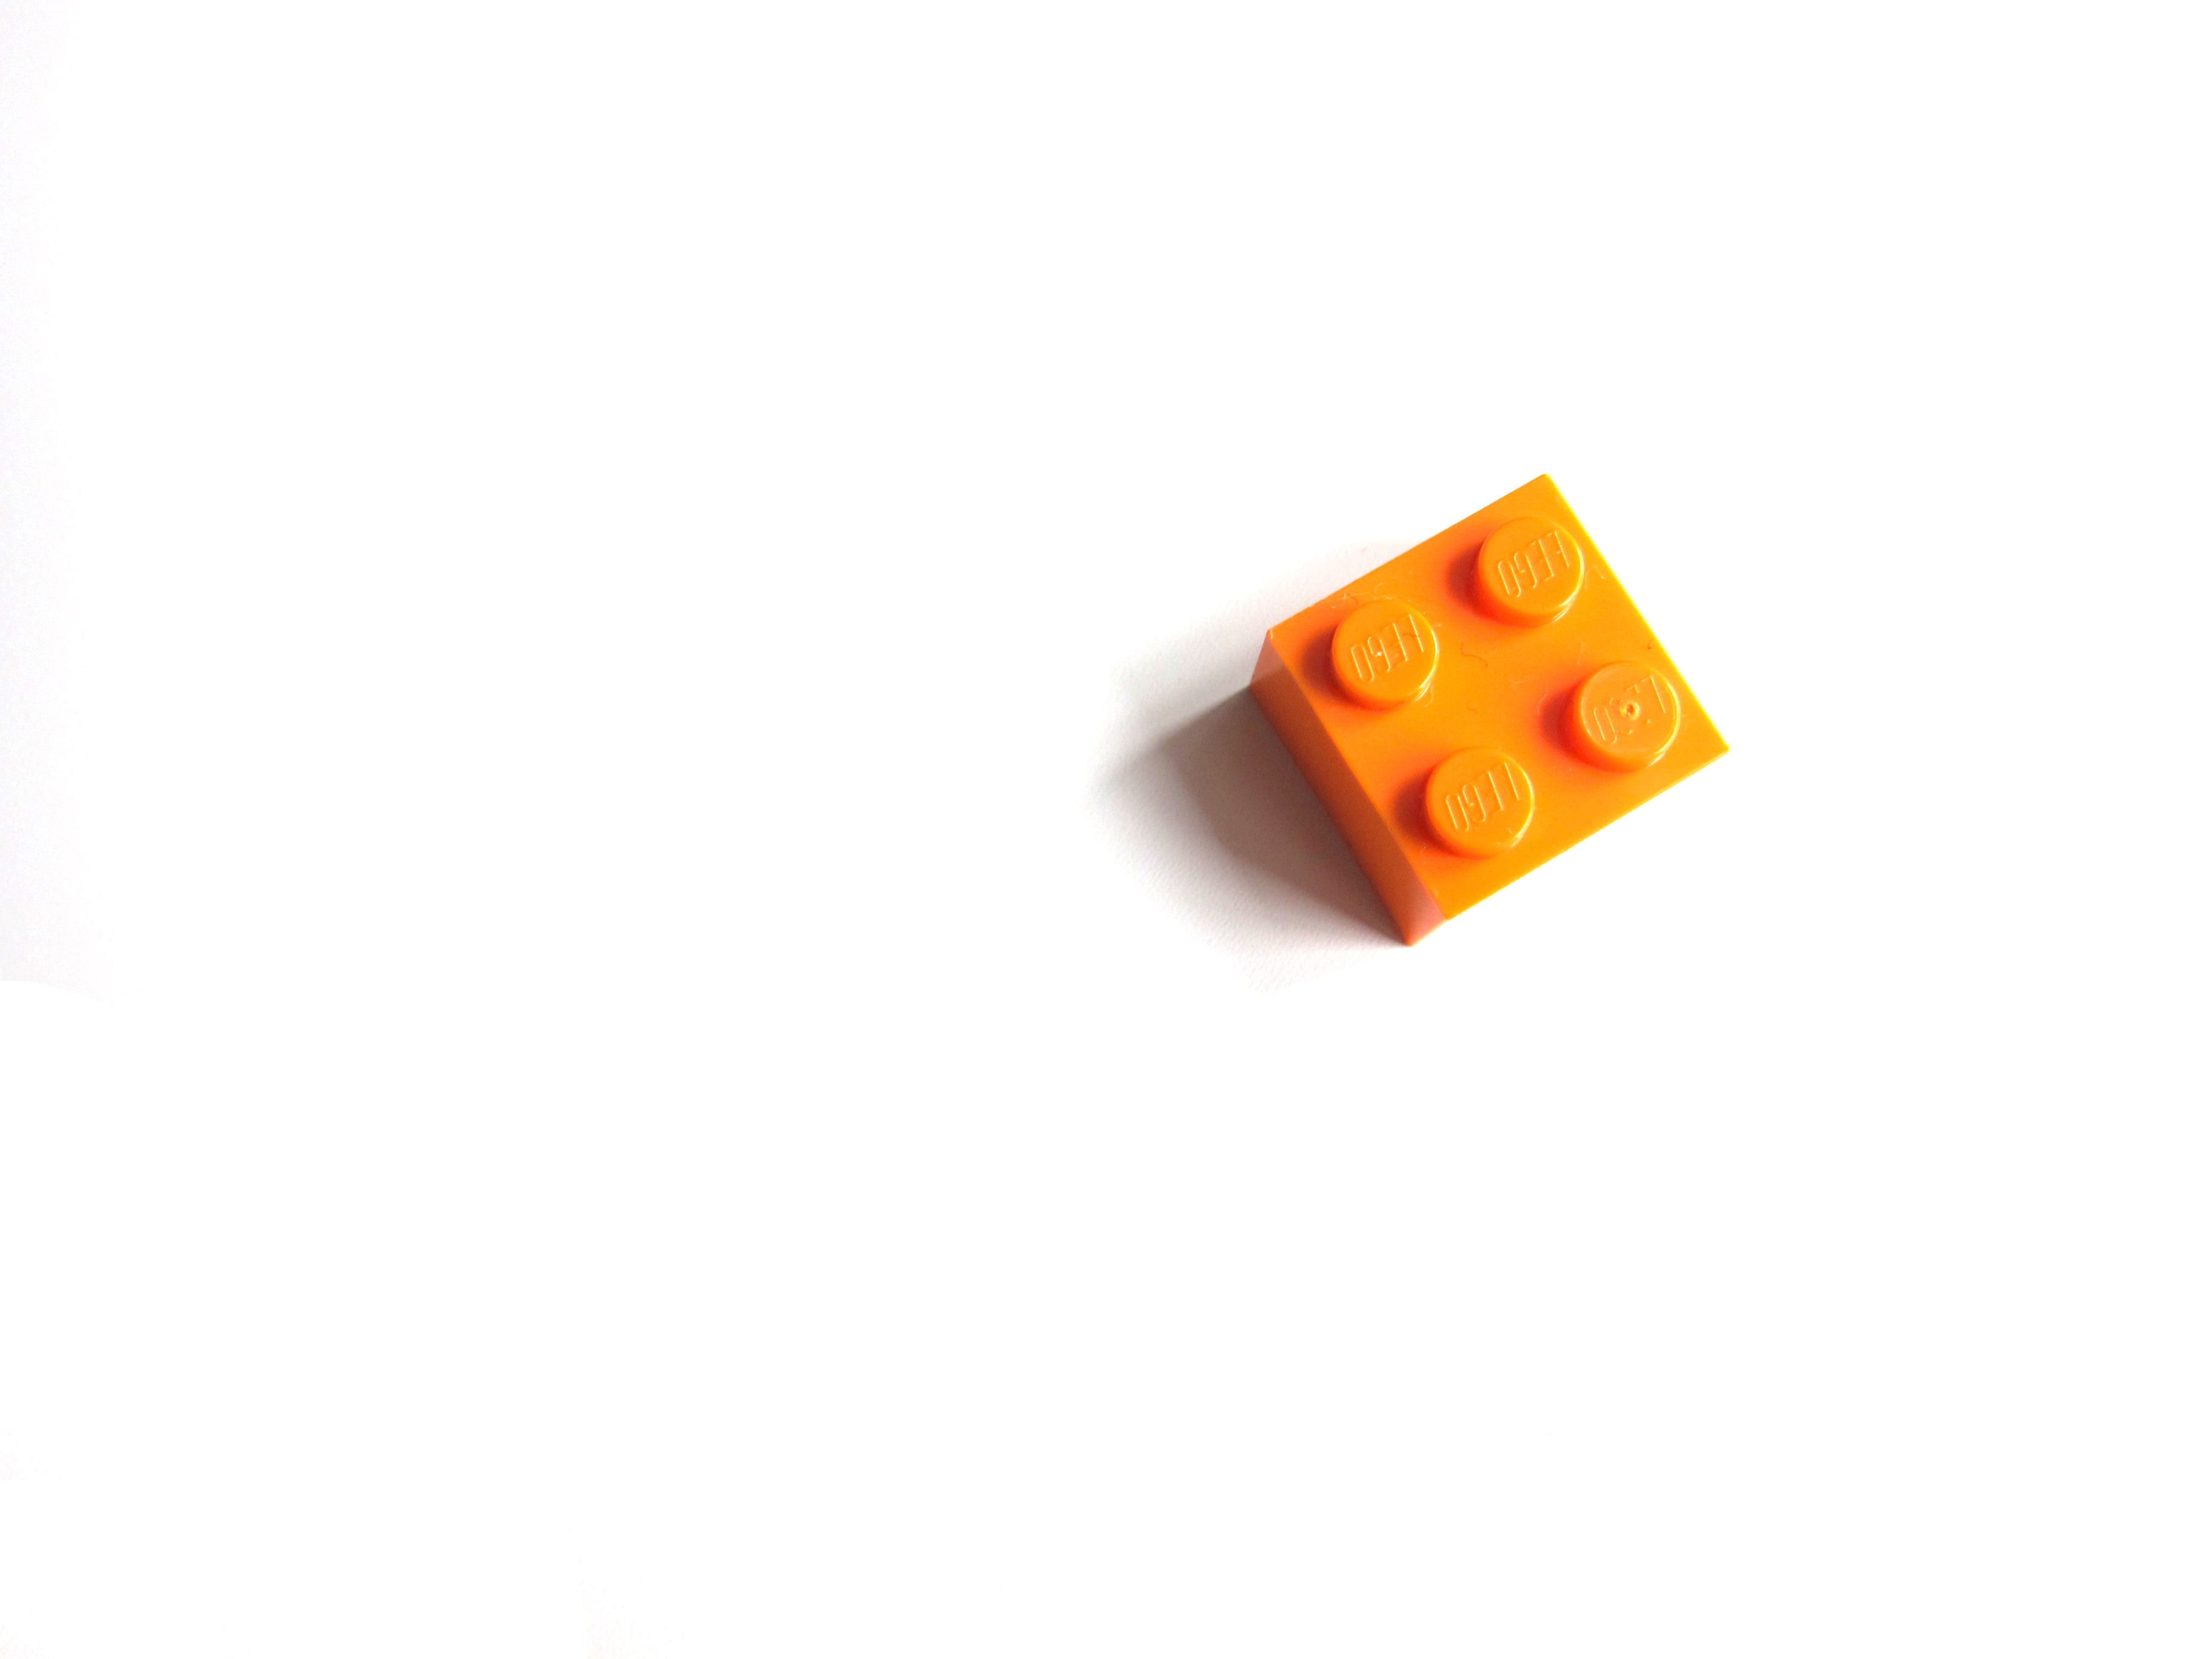 A single, orange lego, face up, sits alone on a white background. 